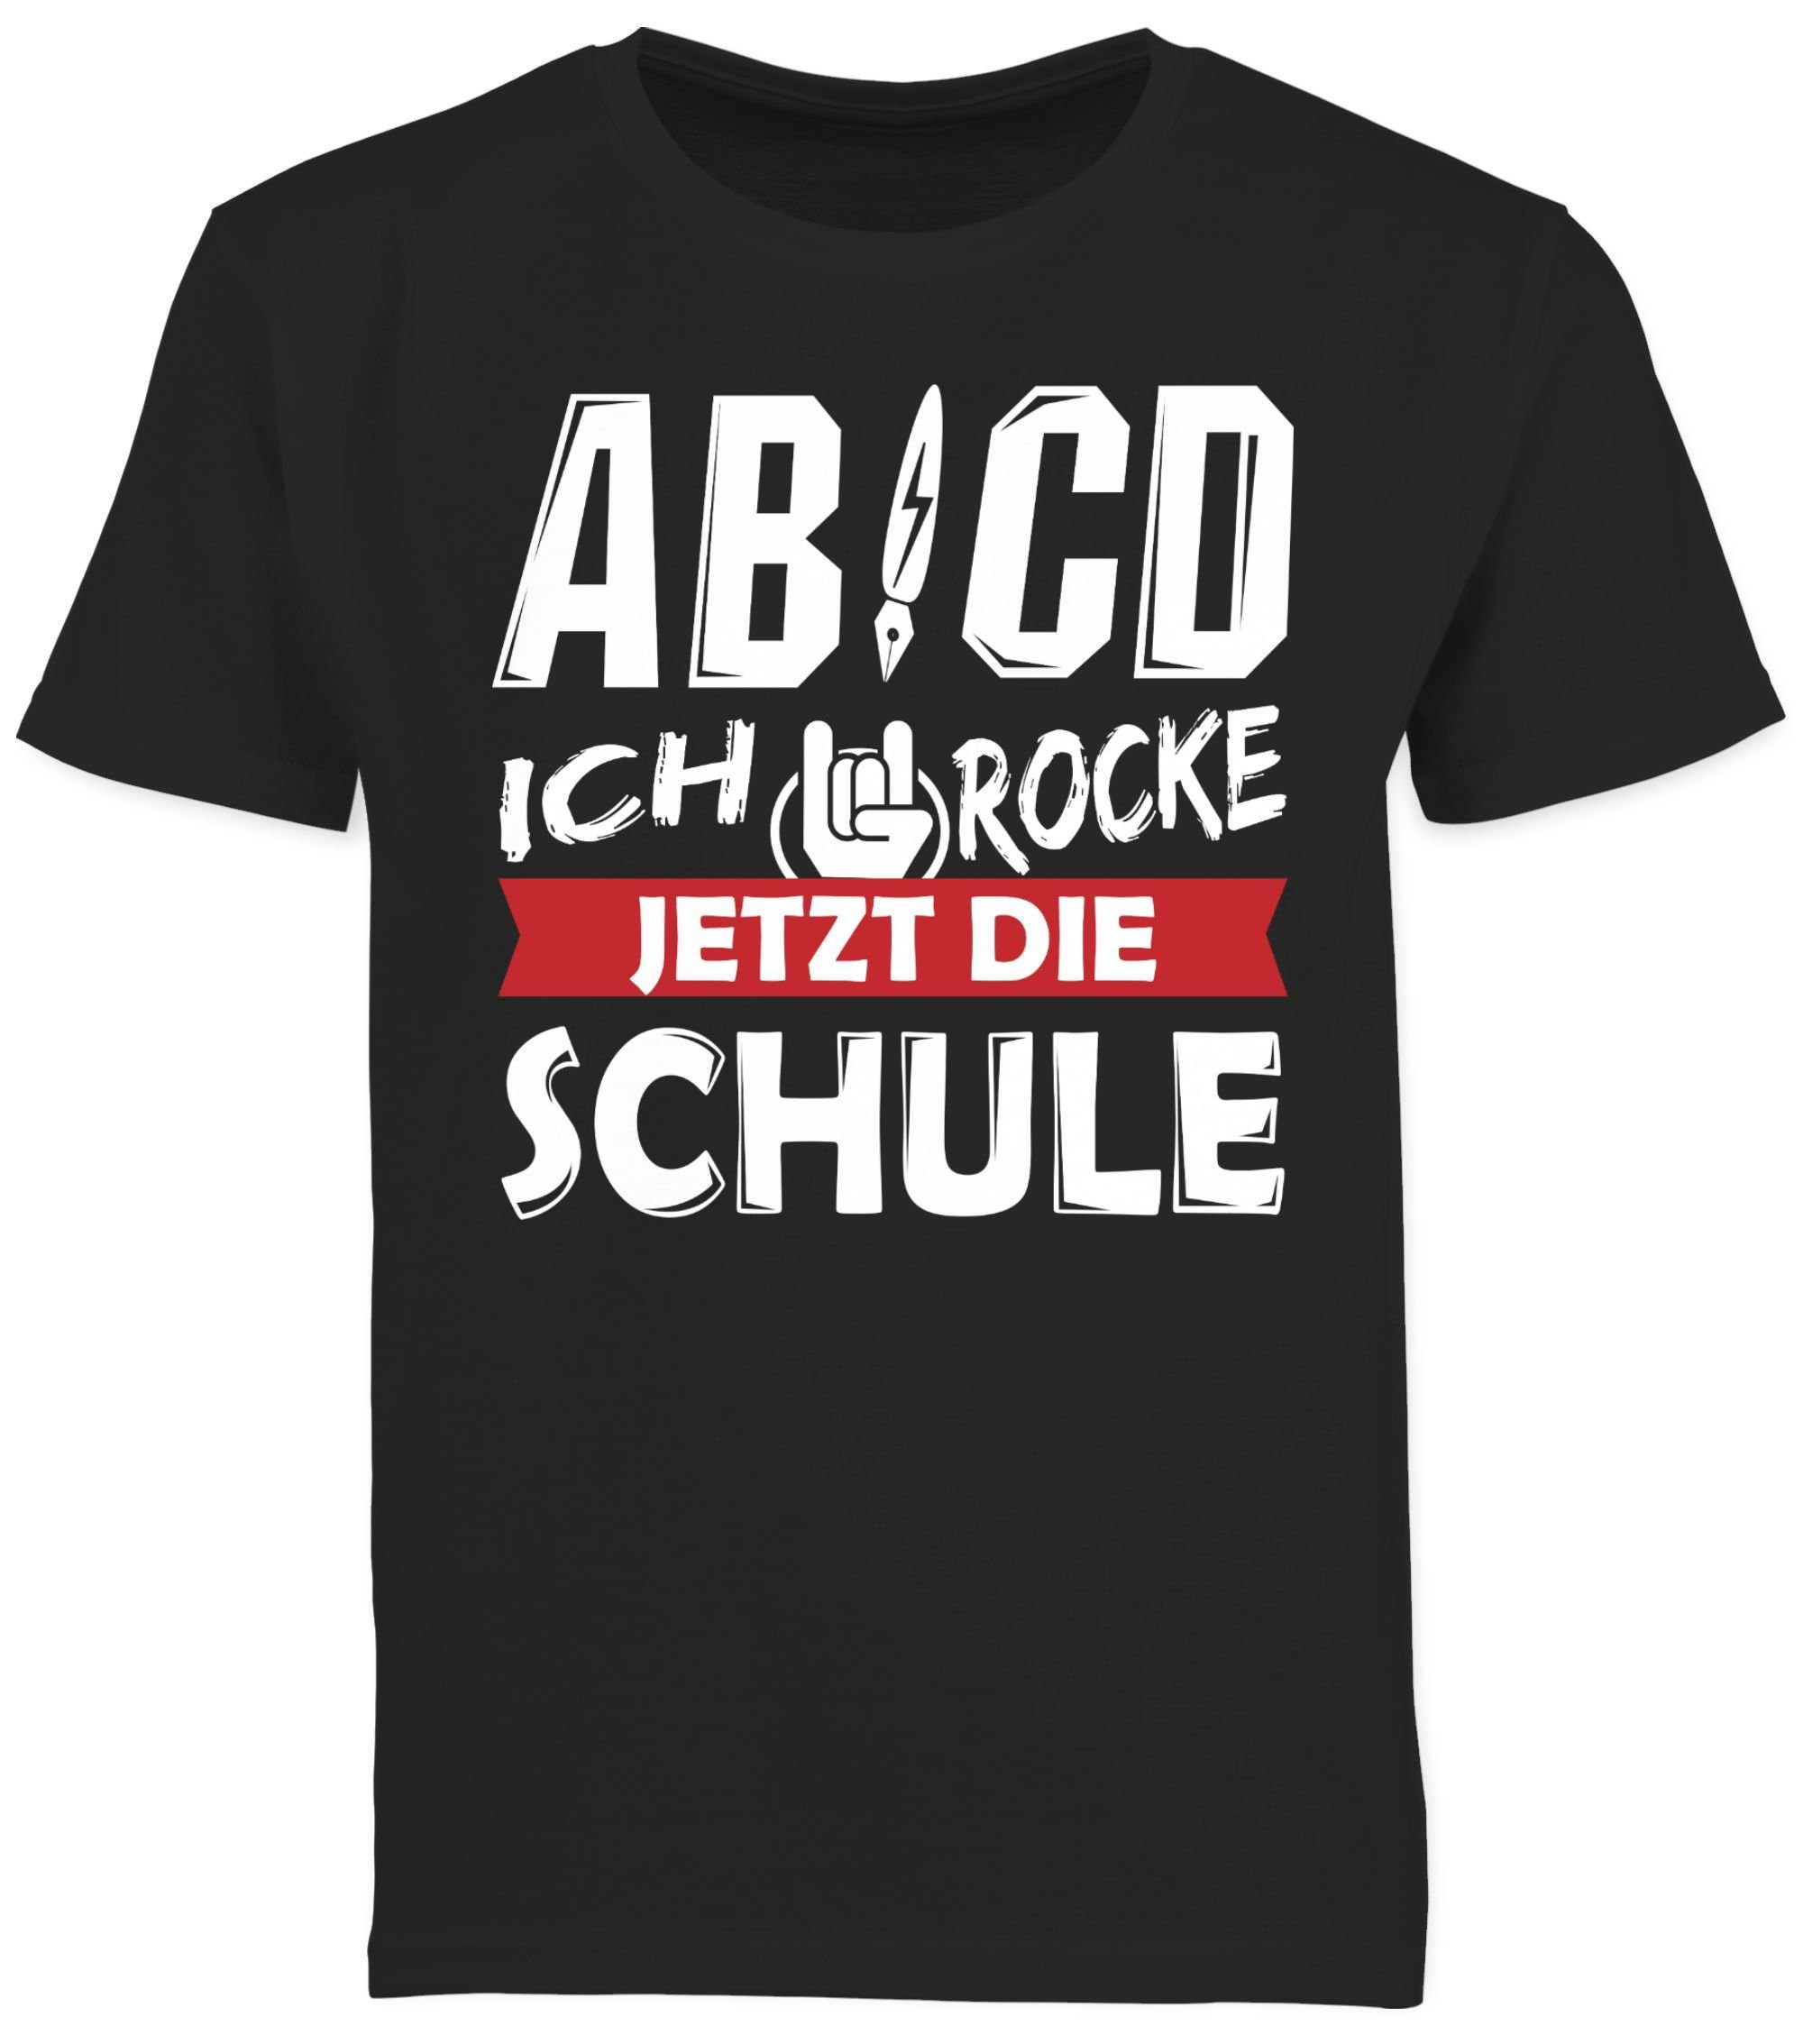 1 jetzt rocke Schulanfang ABCD die Shirtracer Einschulung Ich Junge Geschenke Schwarz T-Shirt Schule